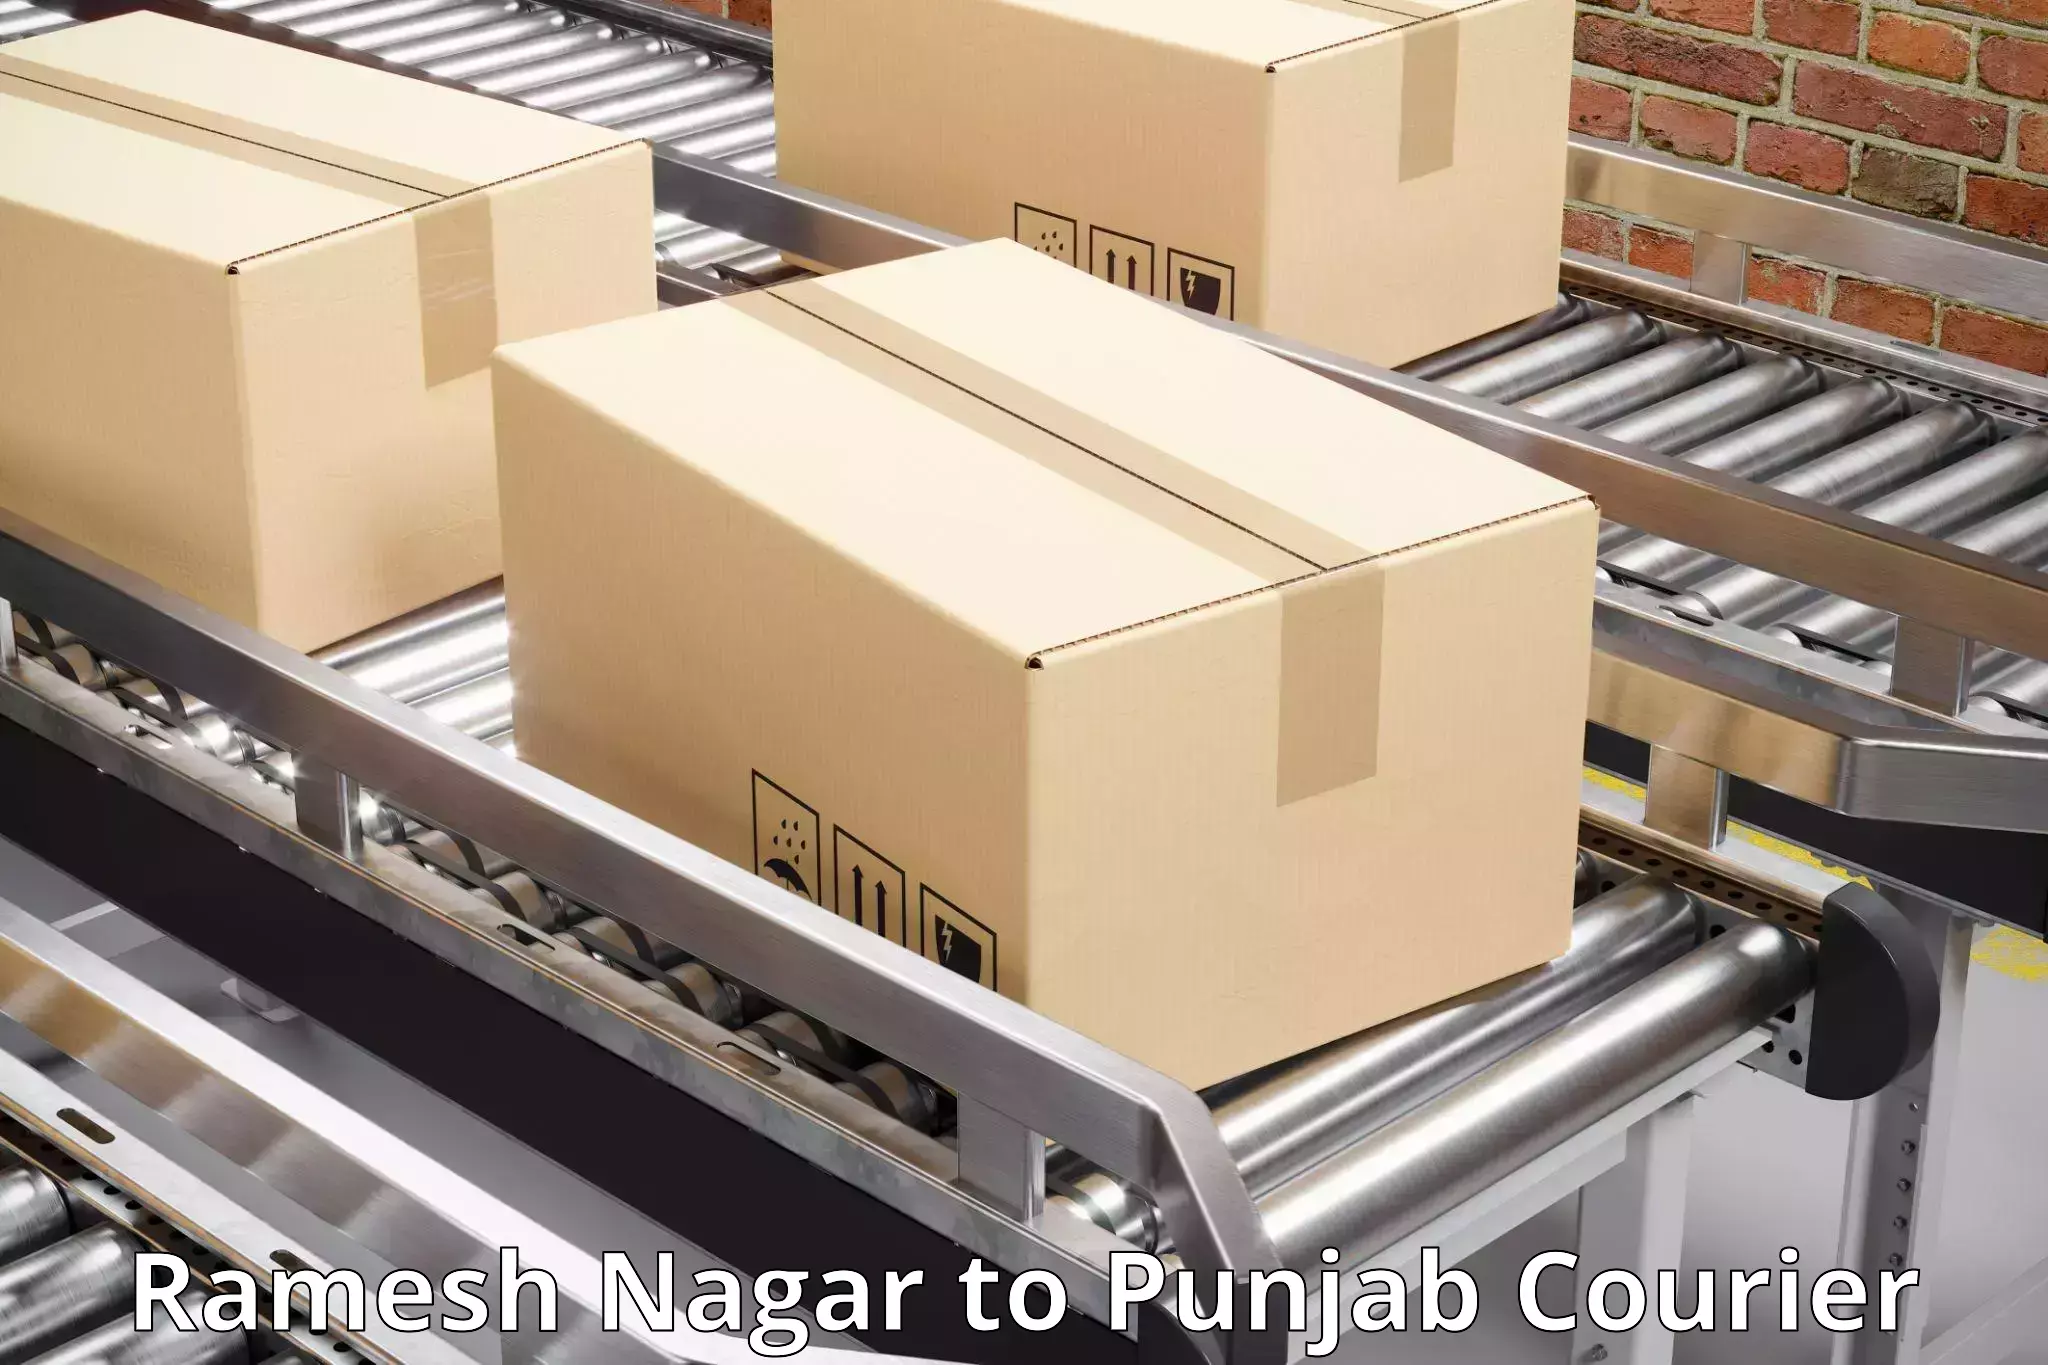 Efficient courier operations Ramesh Nagar to Ludhiana